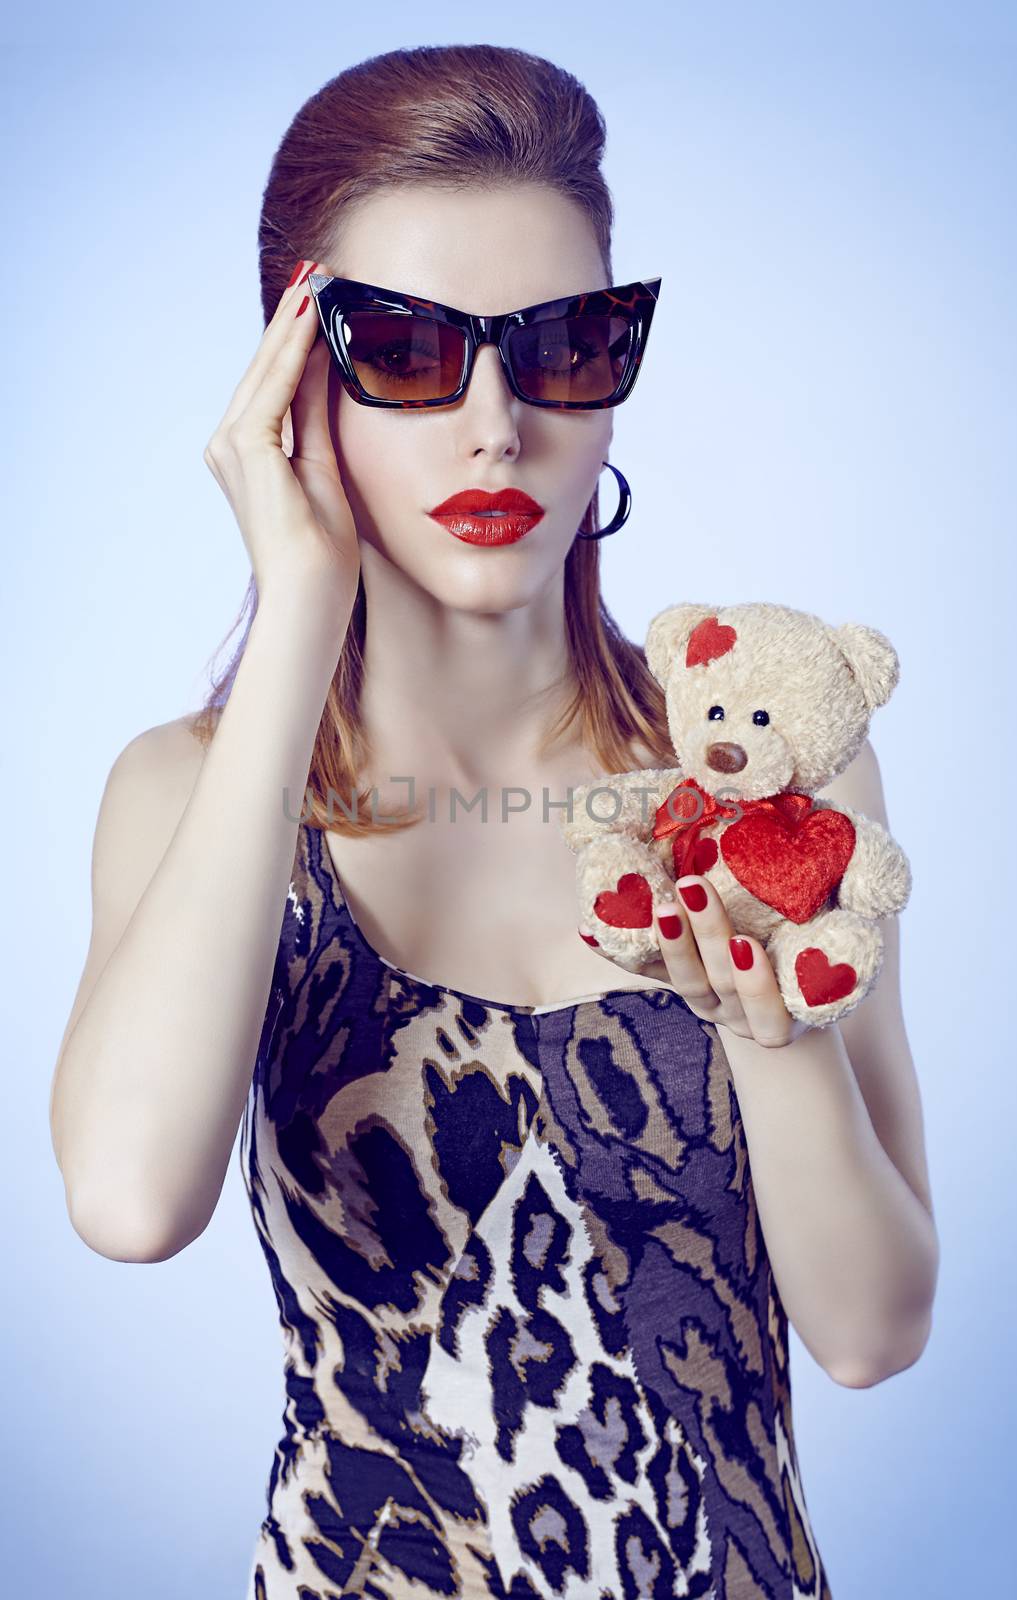 Beauty fashion redhead woman and loving teddy bear by 918